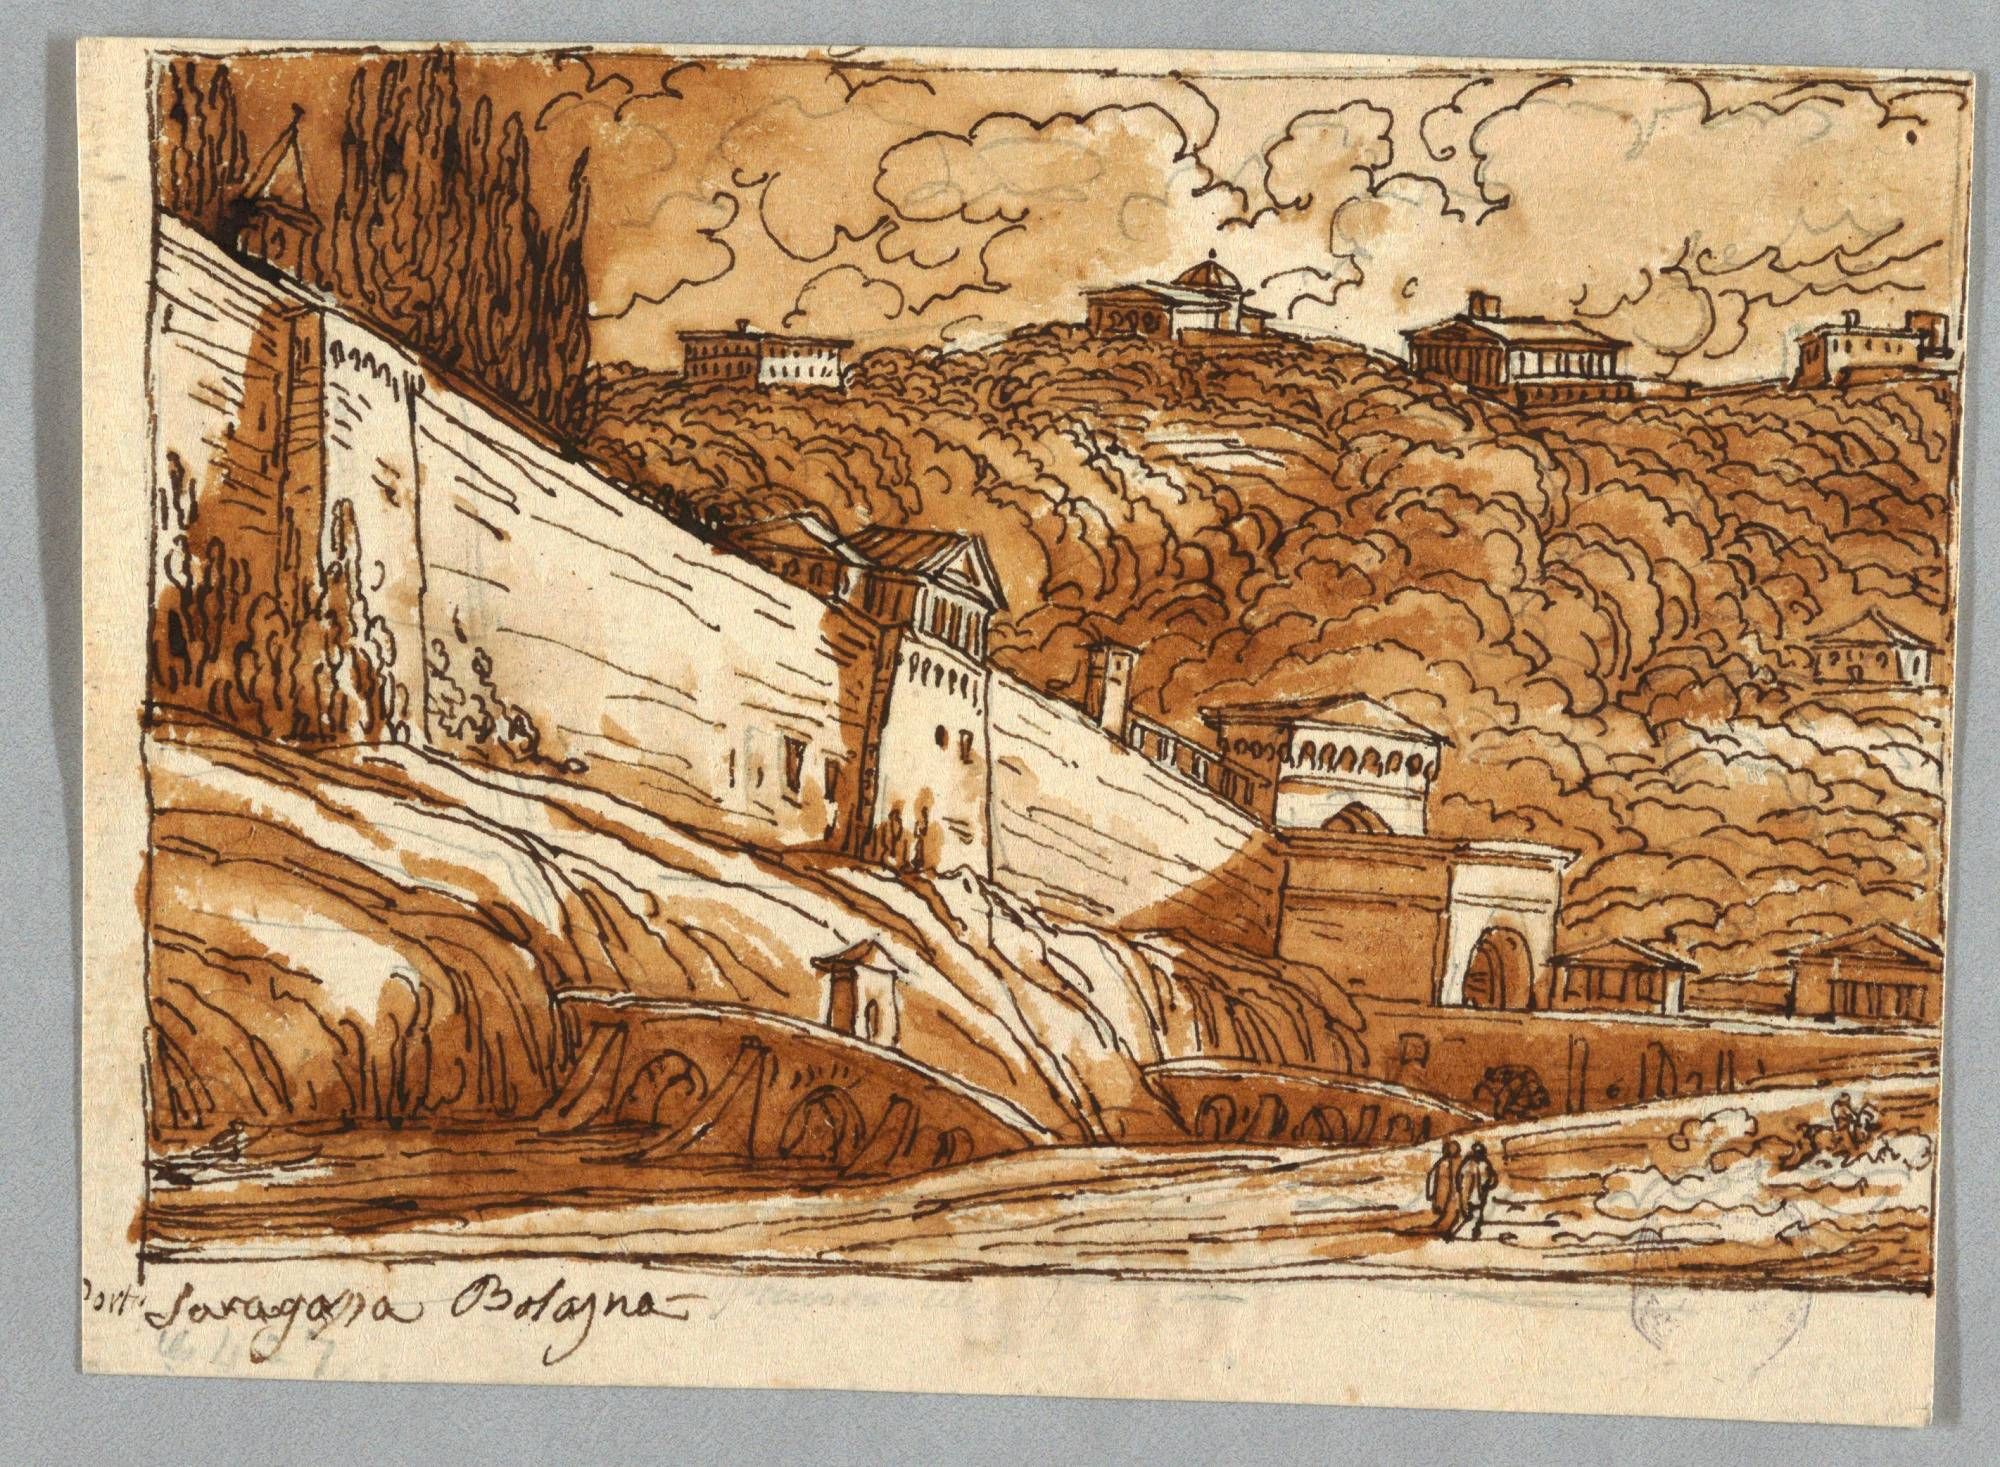 Sketchbook Page, Folio 57: Study after Porta di Saragossa in Bologna; Verso, Architectural Details